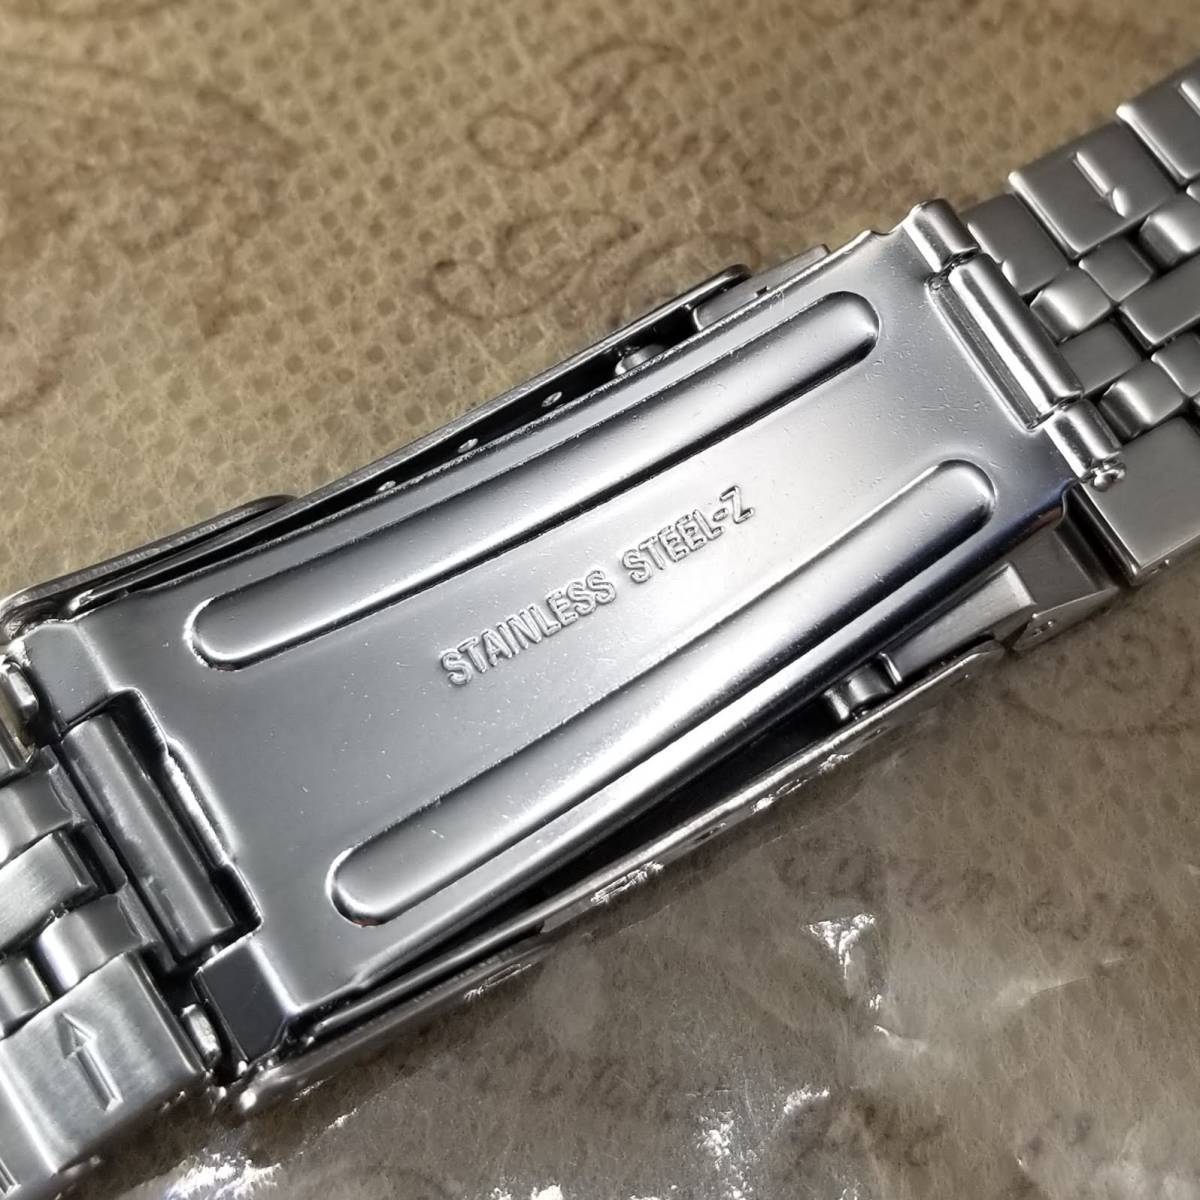  original Seiko Seiko 22mm 5 ream stainless steel band 7S26-0020,SKX007,SKX009 wristwatch belt 44G1JZ